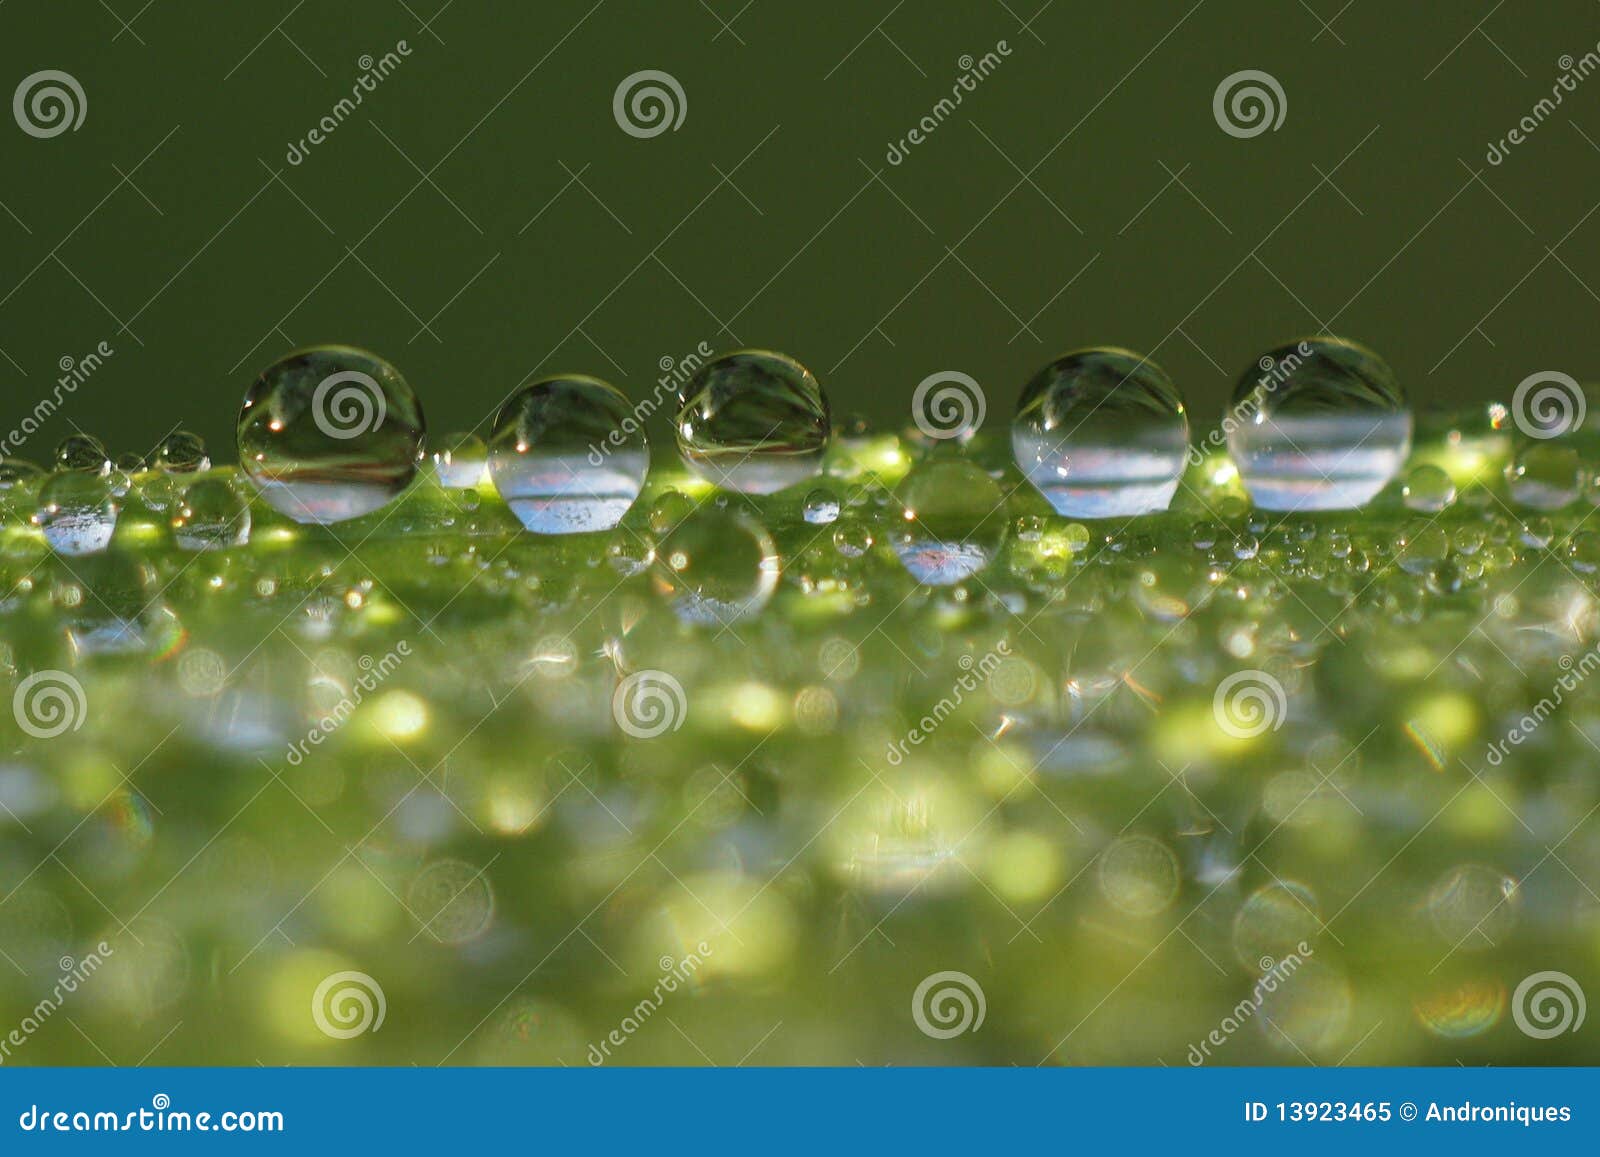 dew droplets on grass blade - macro